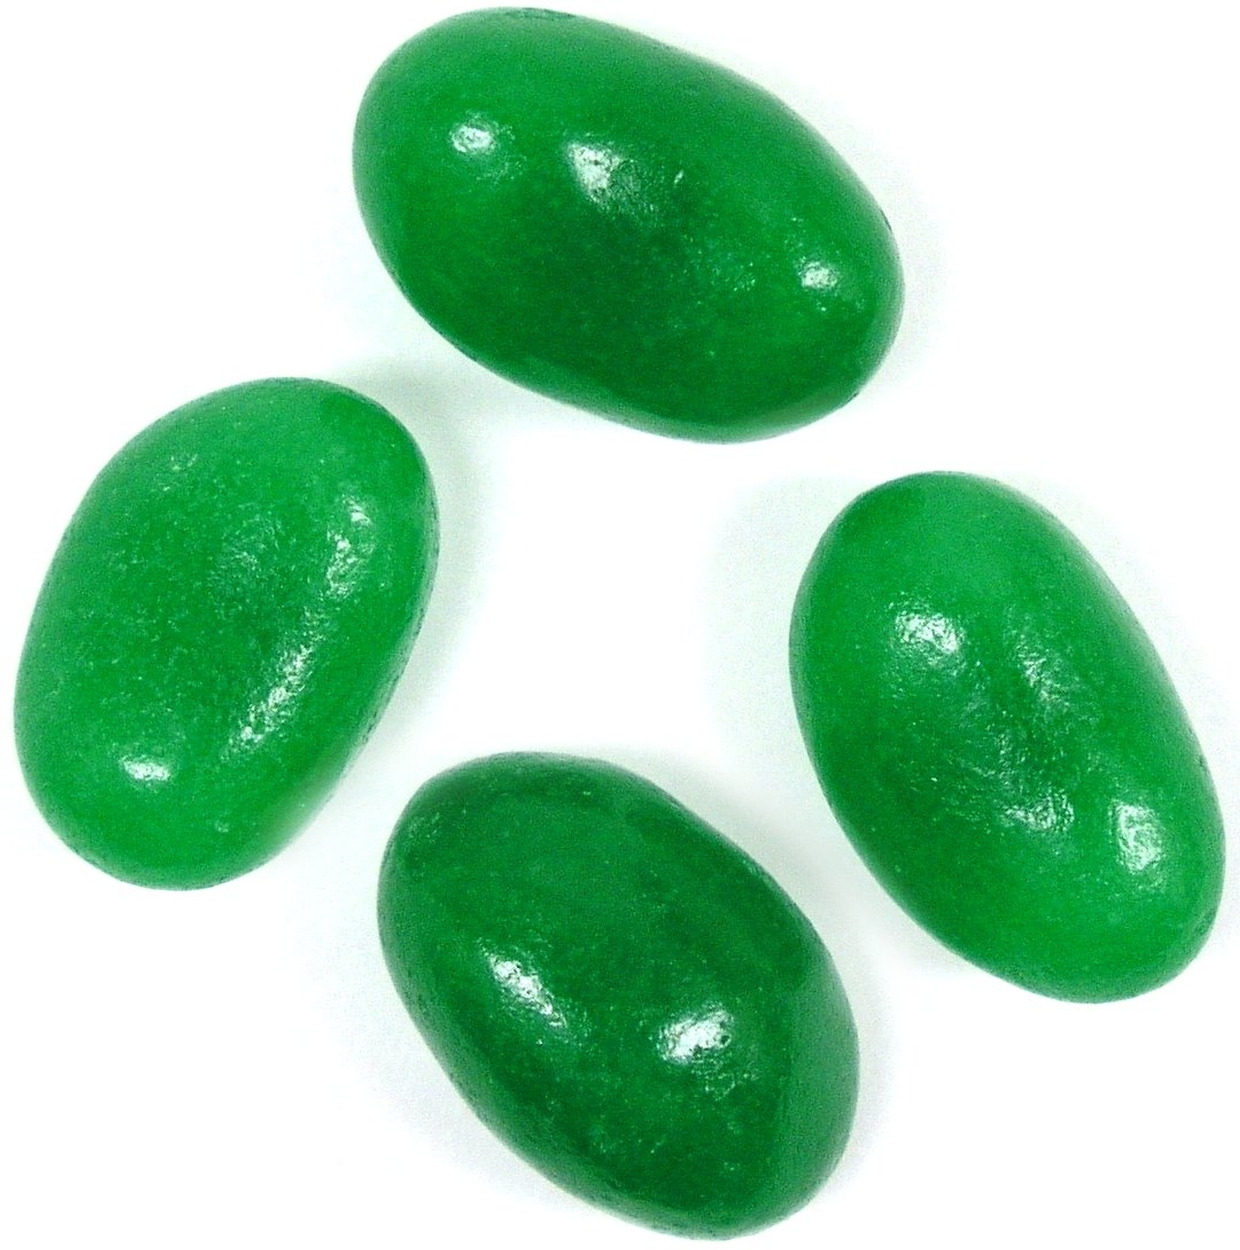 Green jelly. Зеленые желейки. Джелли Грин цвет. Jelly belly Green. Jelly Bean Лакриция.